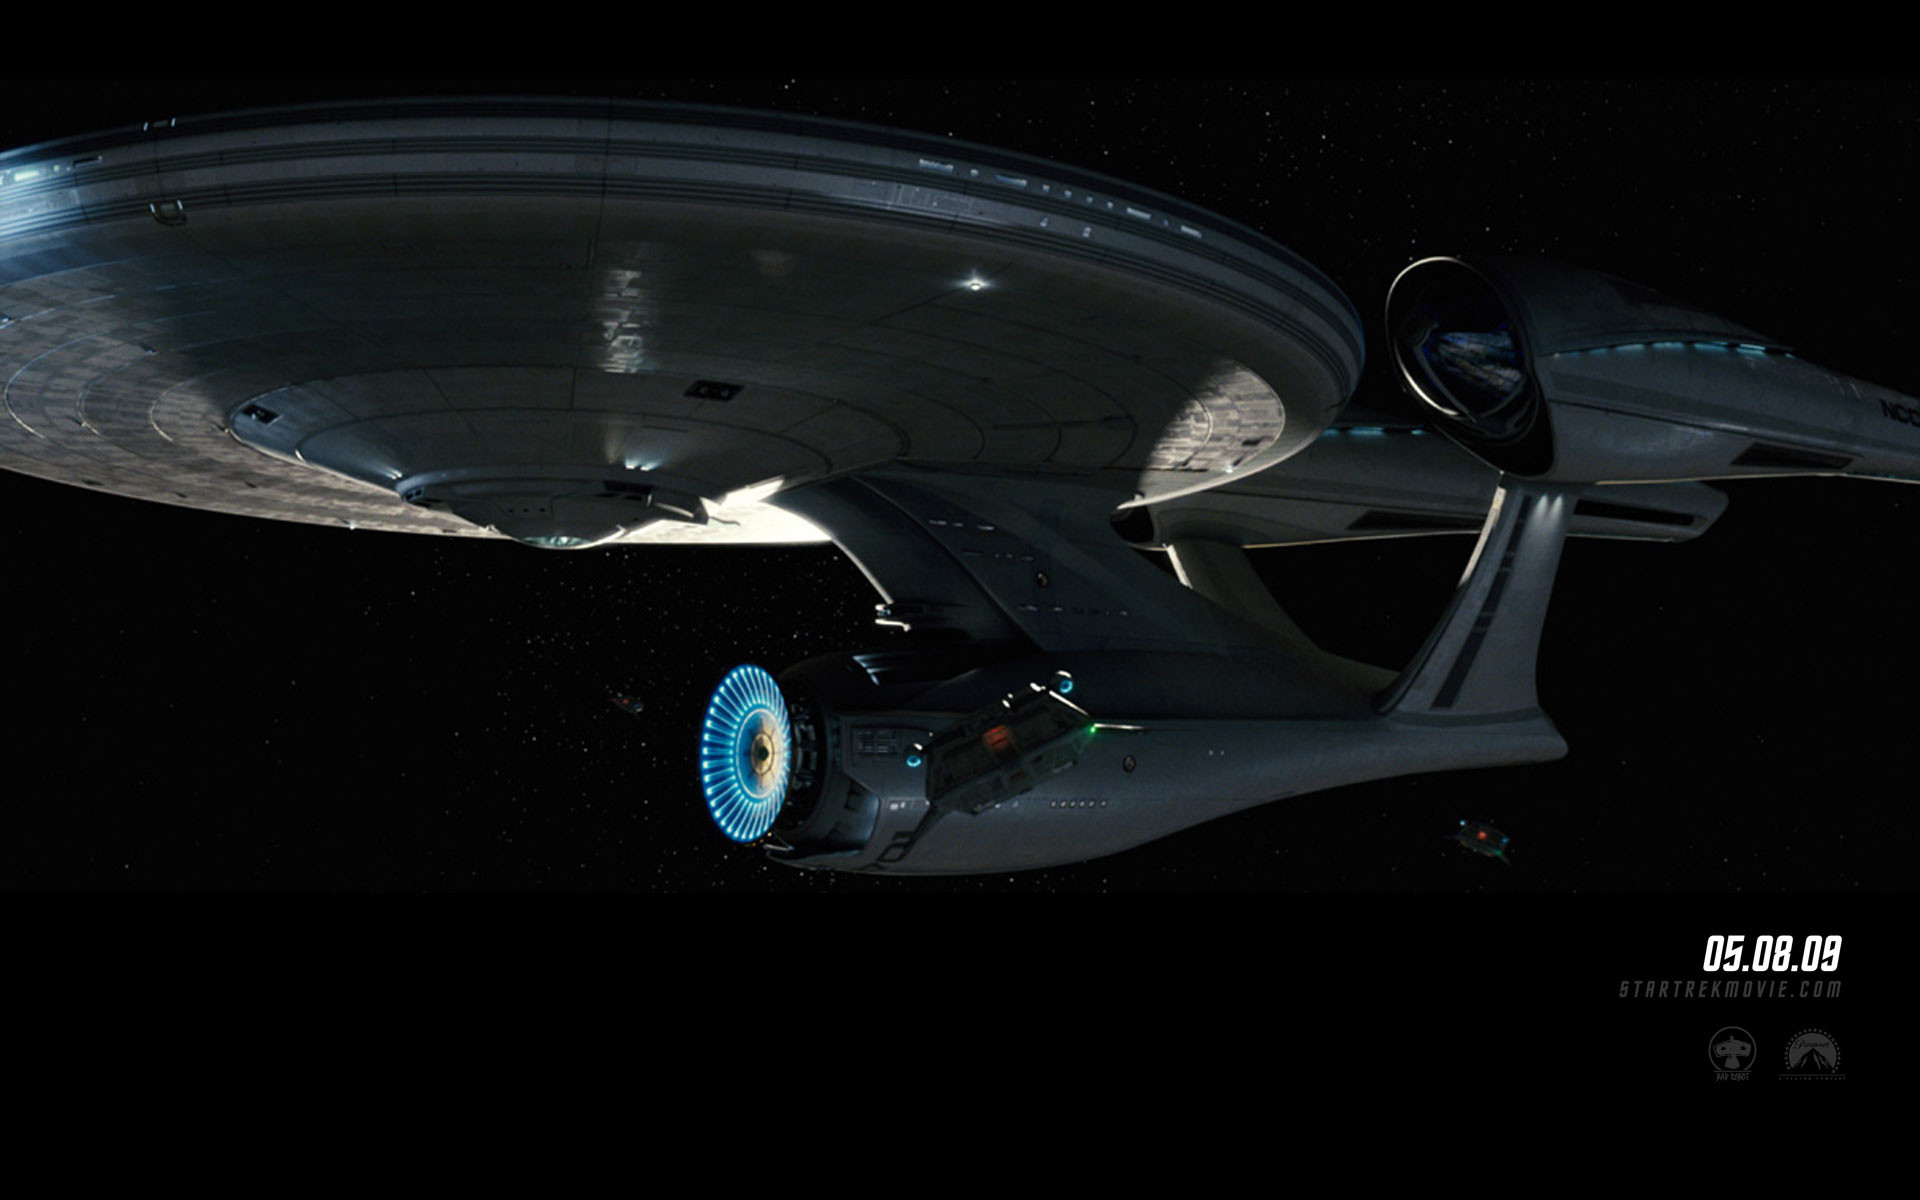 "Star Trek" desktop wallpaper number 10 – the 2009 movie version of the USS